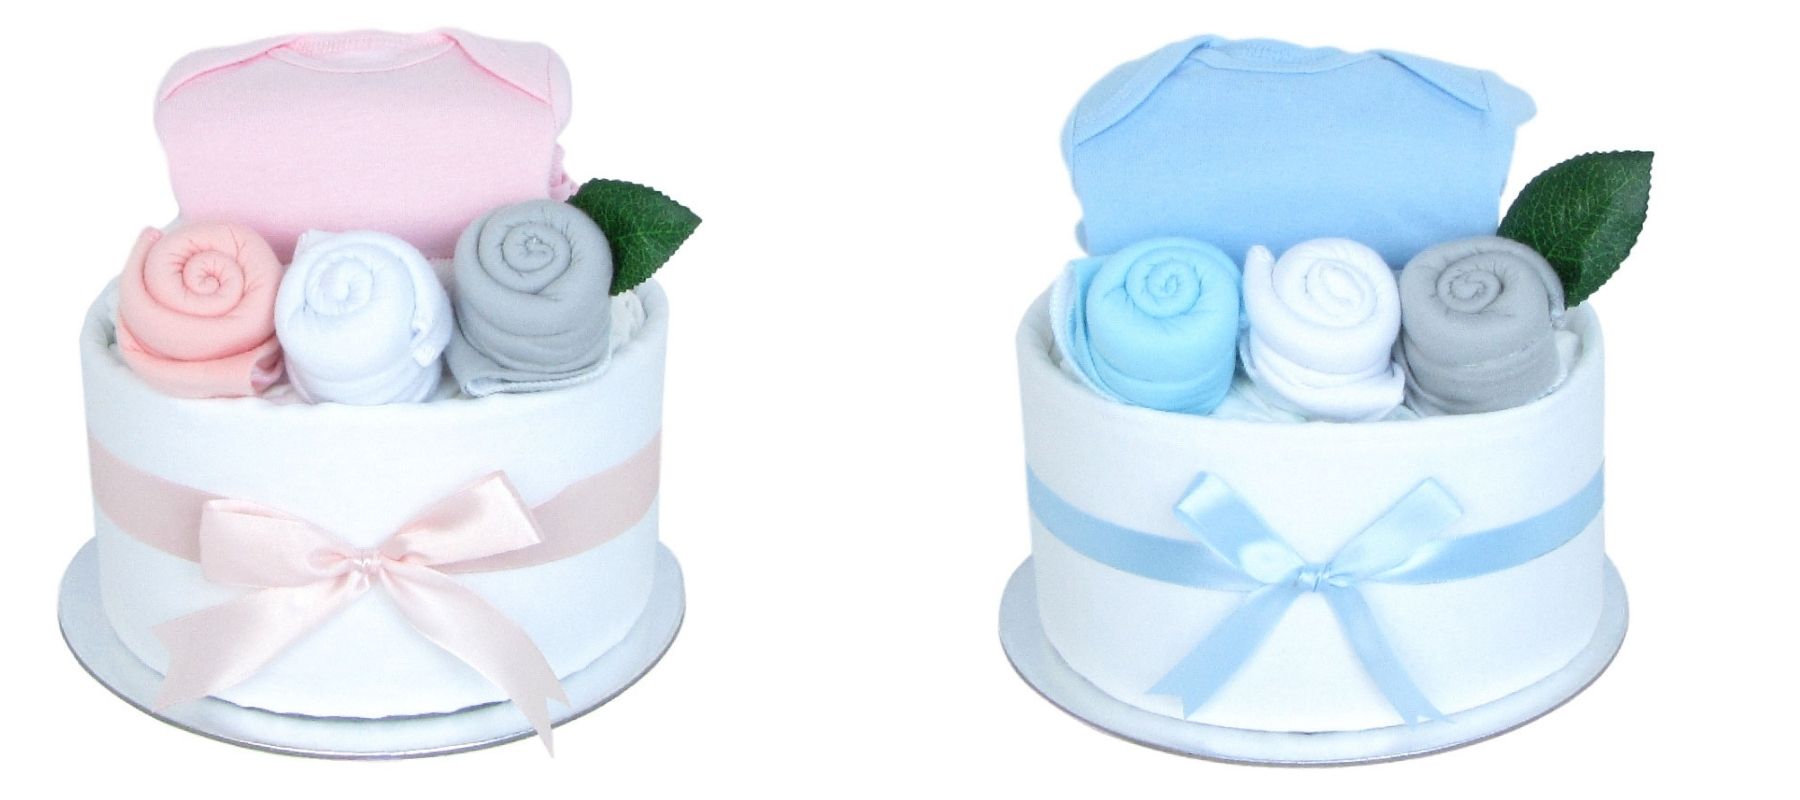 Deluxe Baby Gift Basket - Blue for Boys - Great Shower Gift Idea for  Newborns - Walmart.com